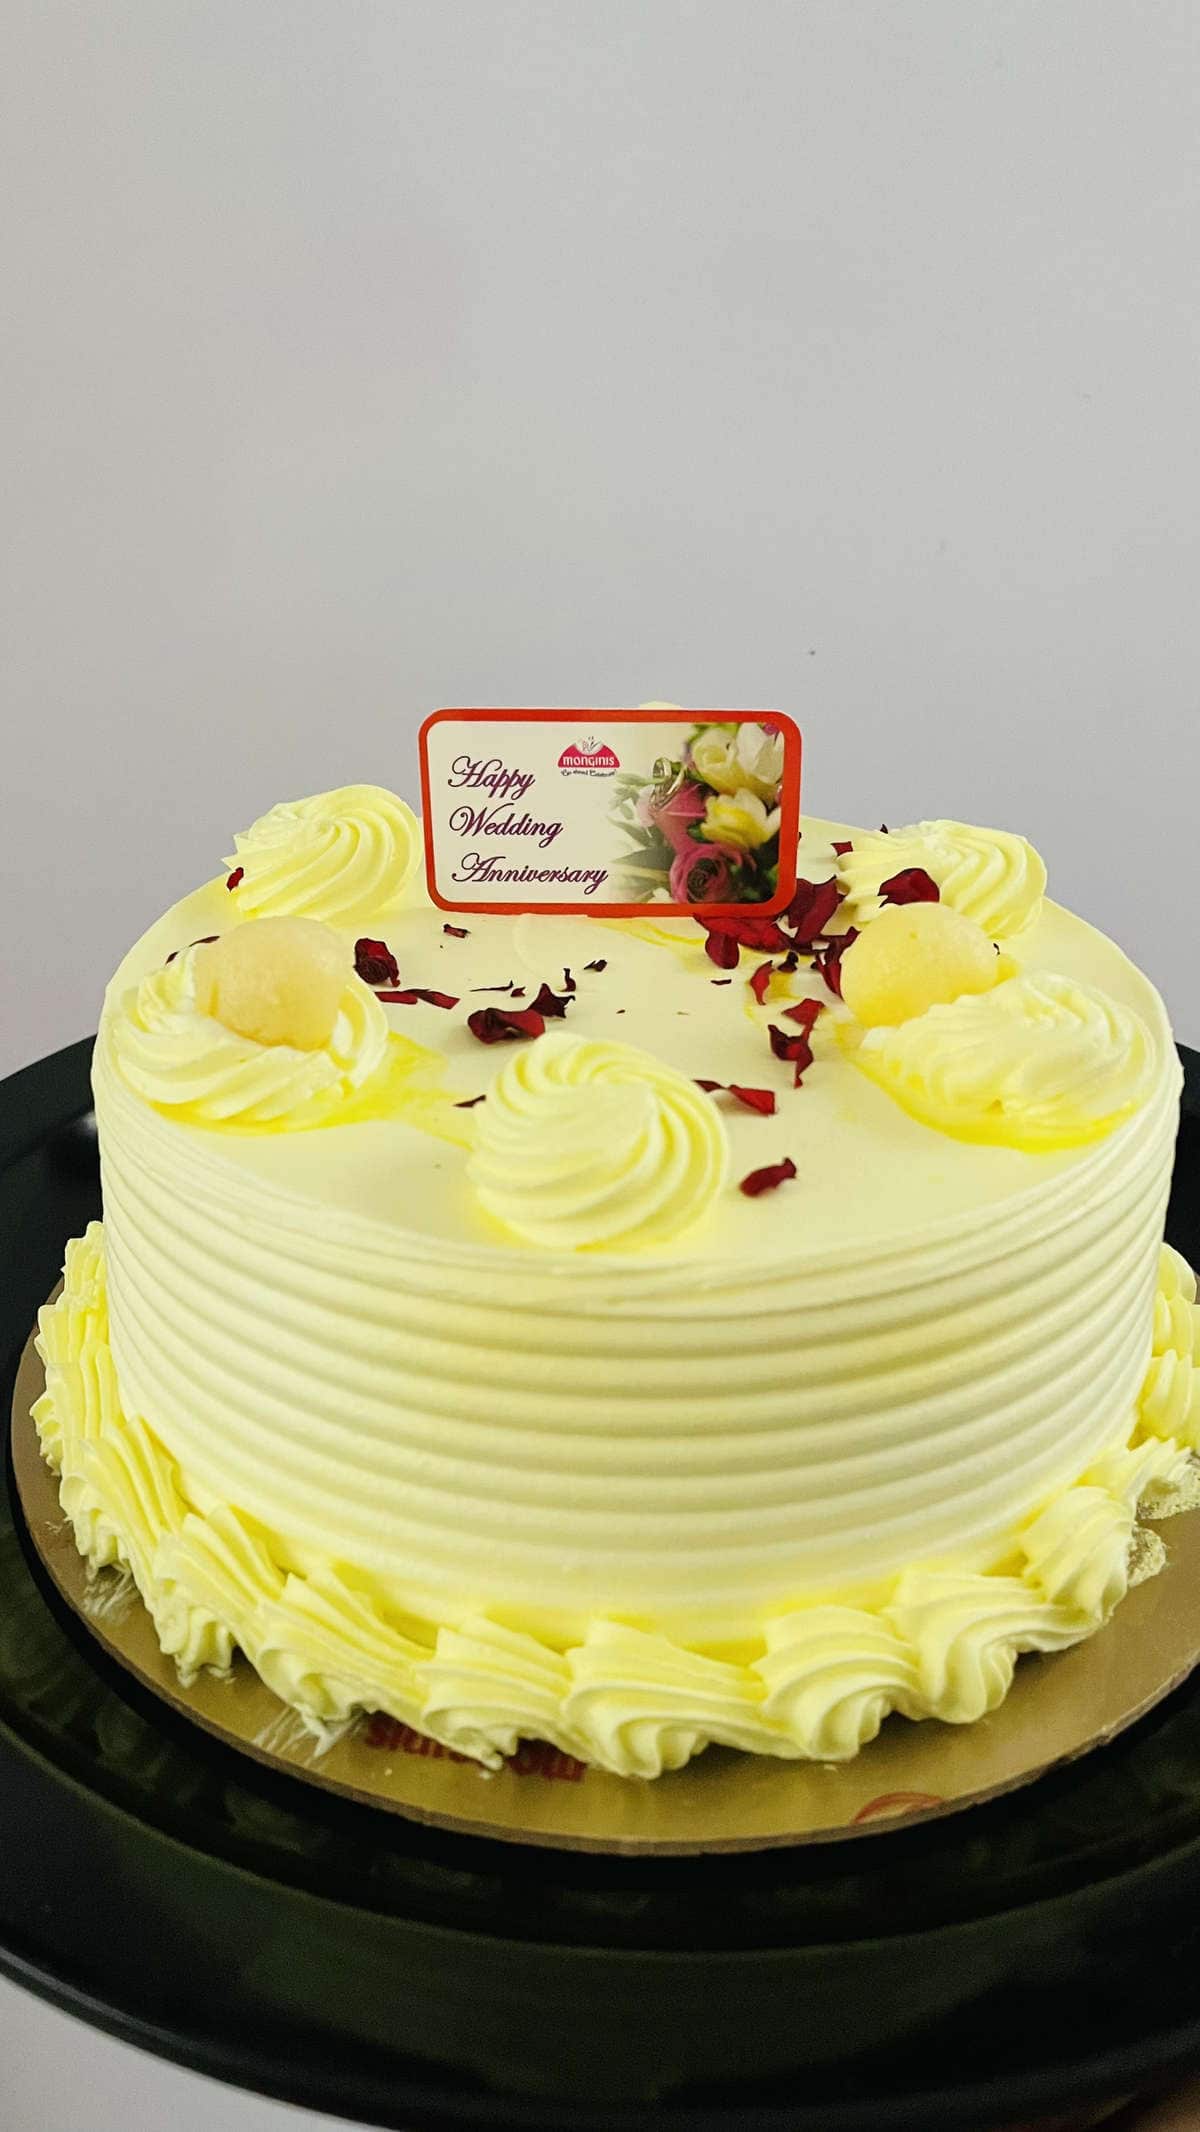 Monginis West Bengal - Alphonso Mango Cake - Rs.250 | Facebook